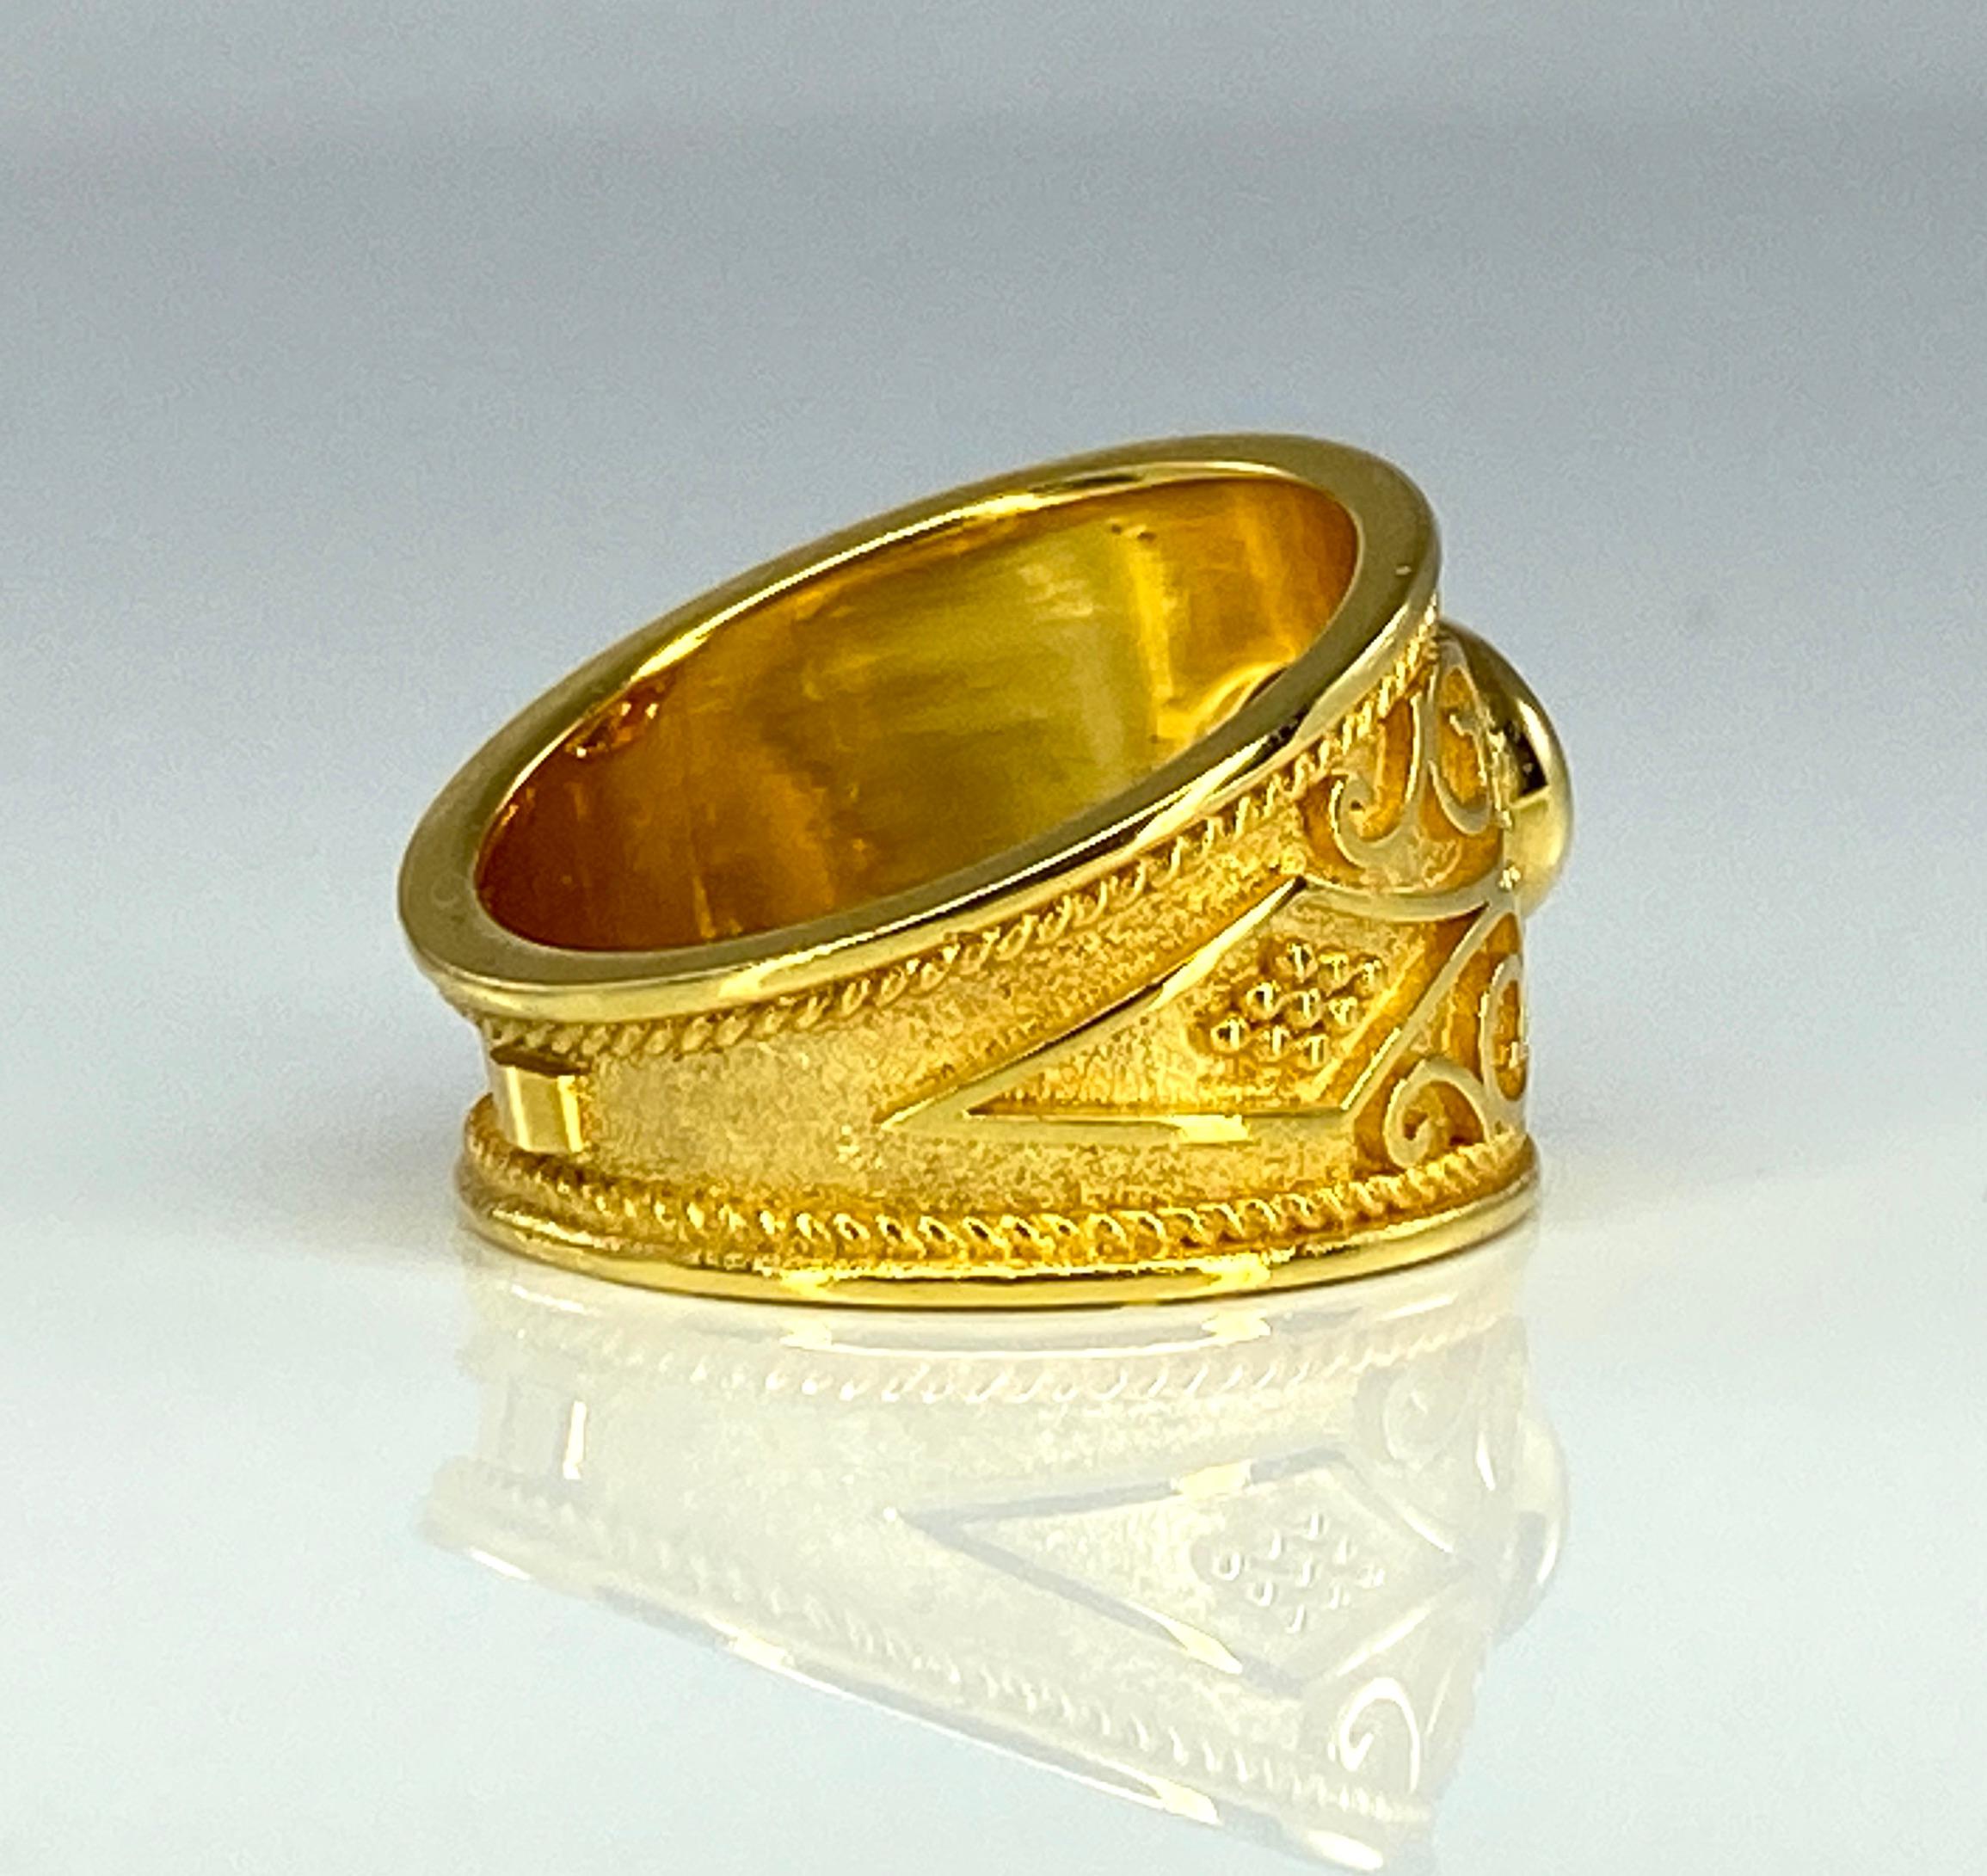 byzantine style rings